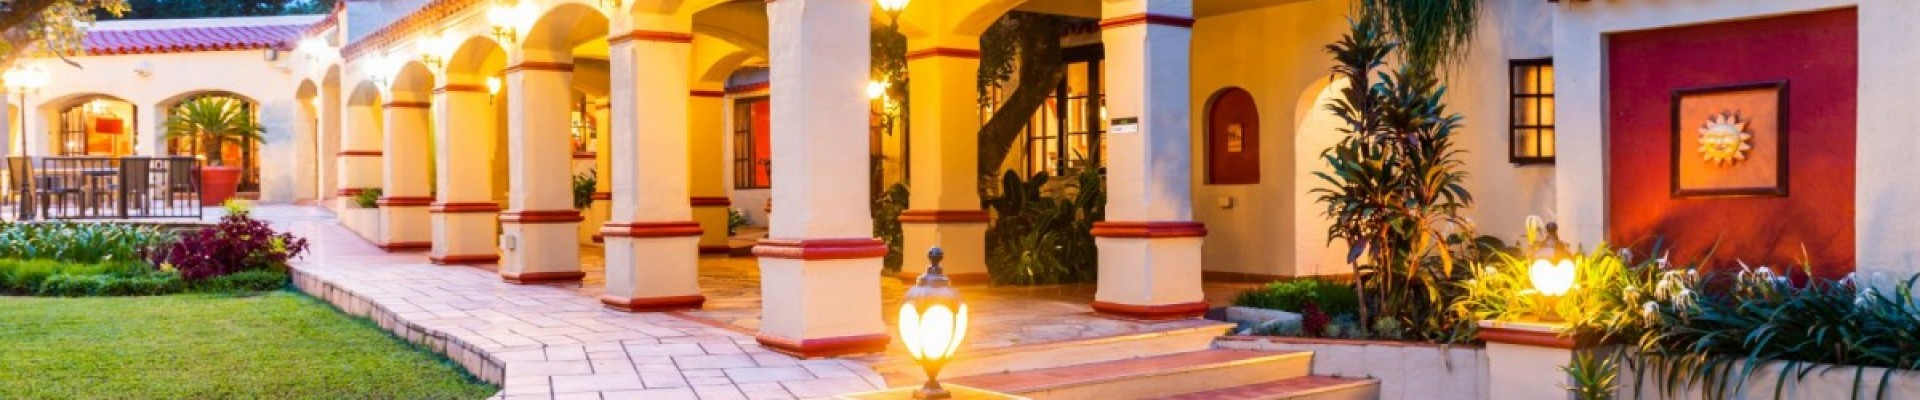 4* aha Casa do Sol Hotel & Resort  - Hazyview Package (2 Nights)